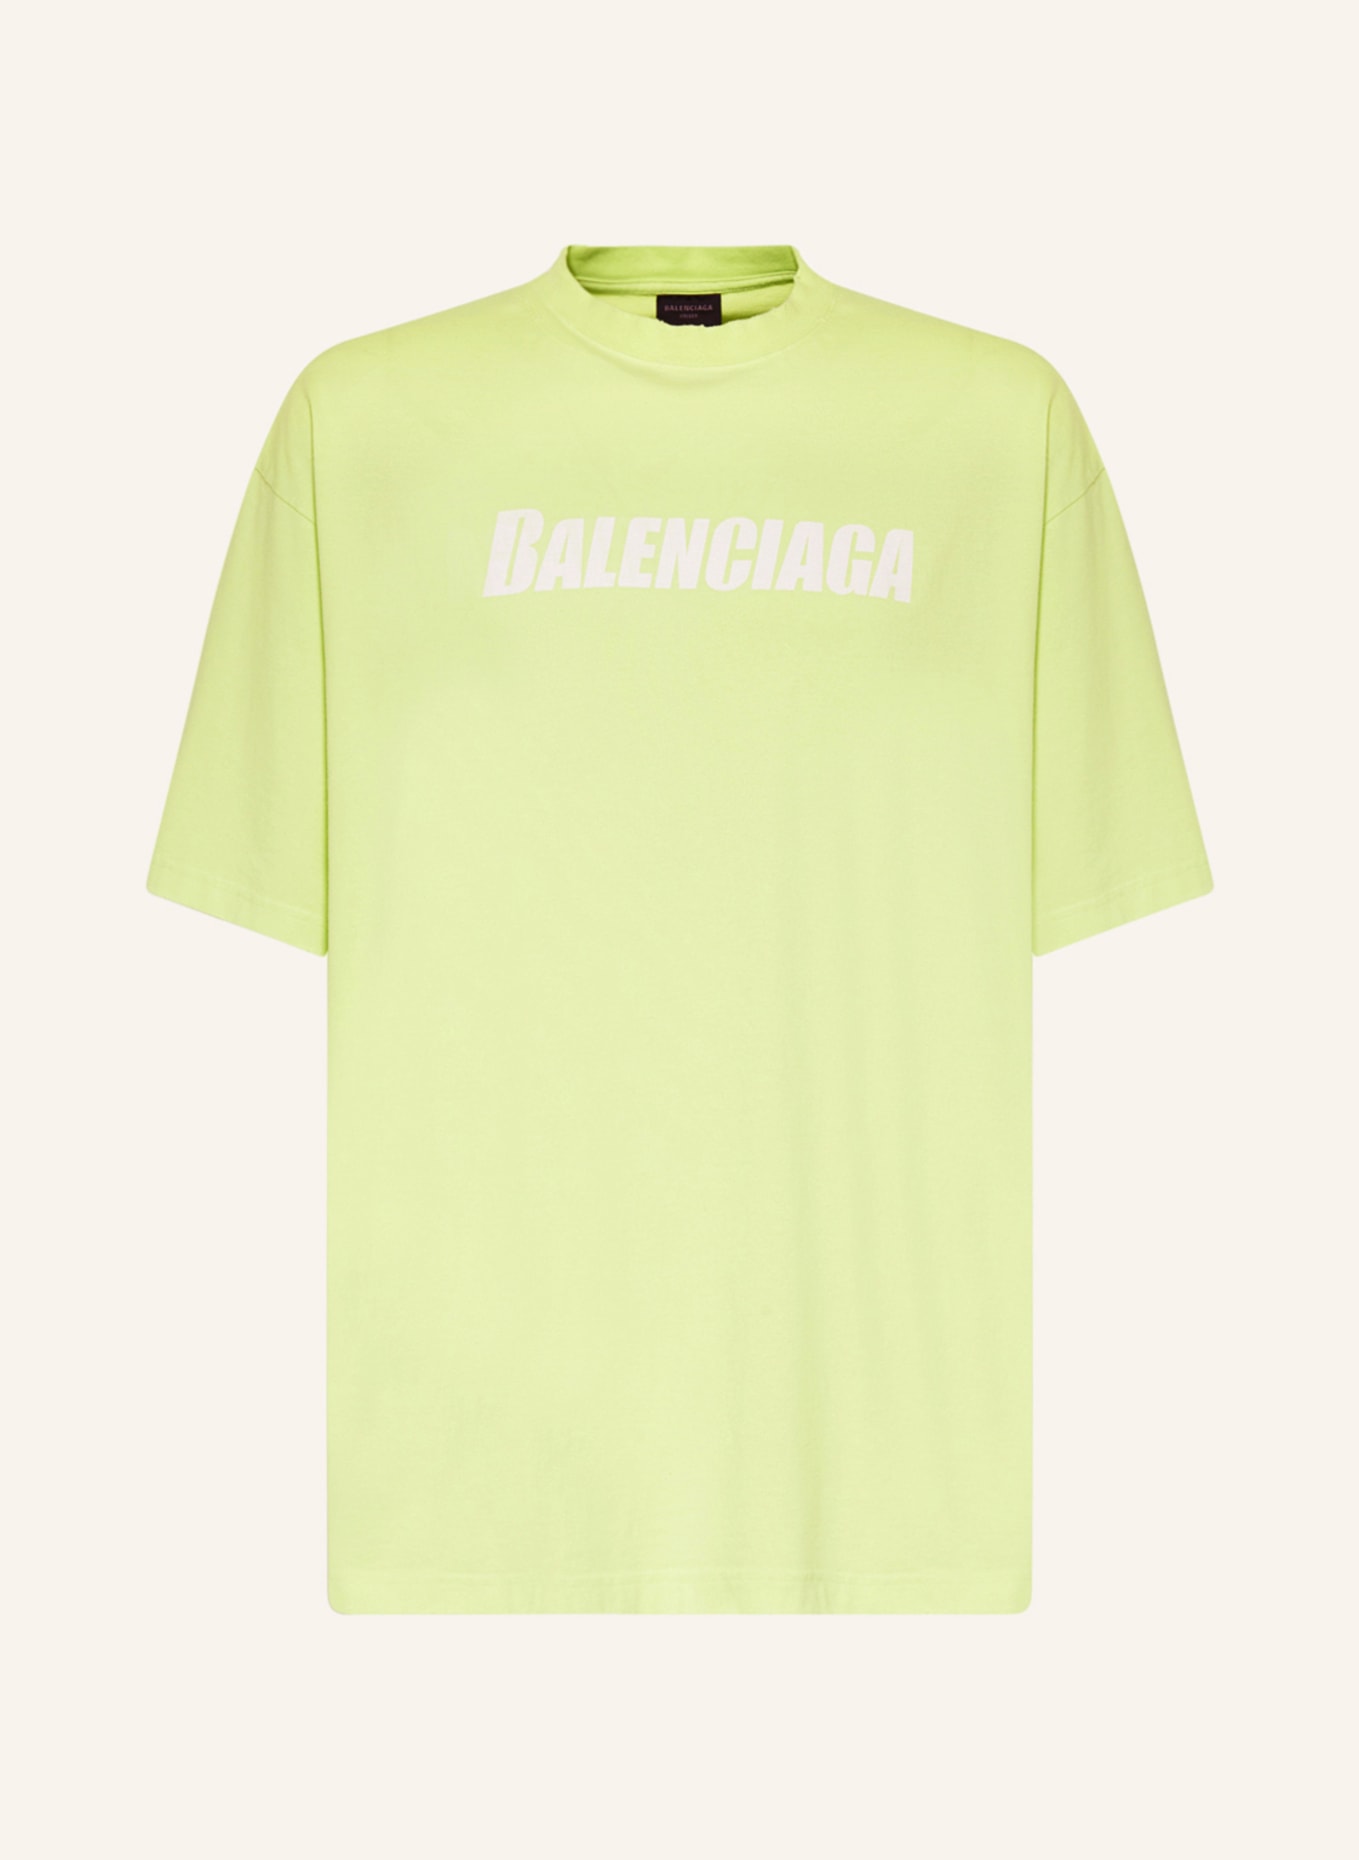 BALENCIAGA Oversized-Shirt, Farbe: NEONGRÜN/ WEISS (Bild 1)